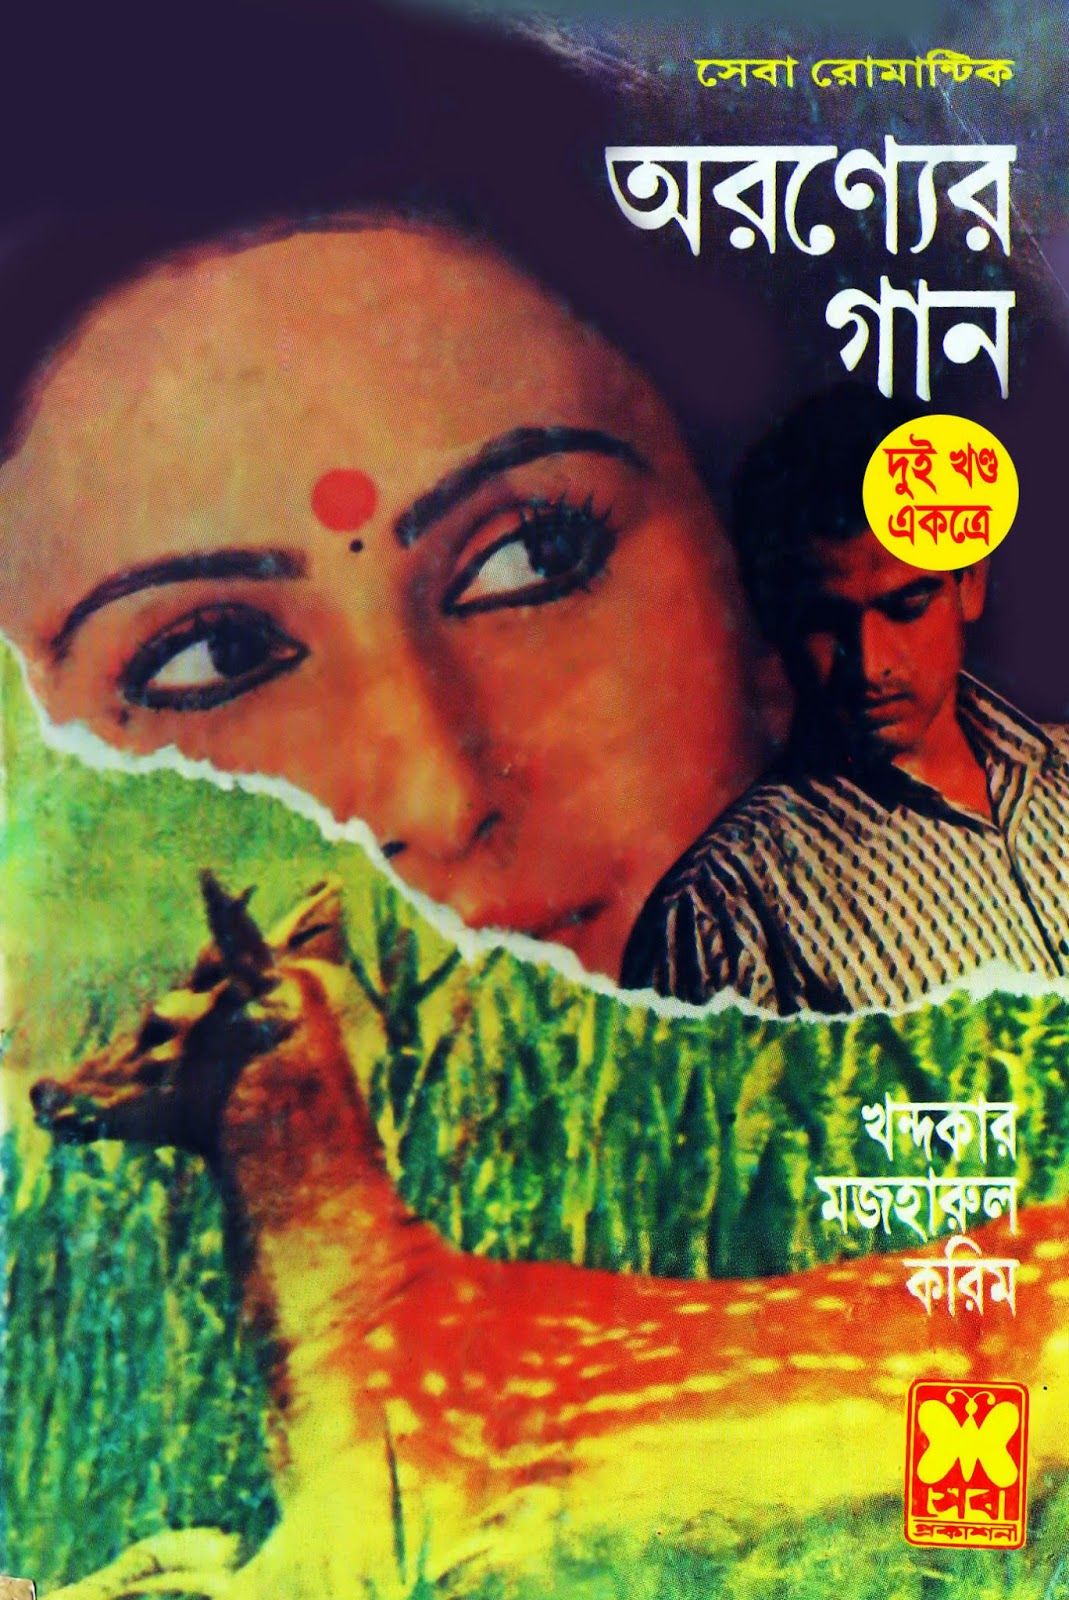 pdf book download bangla